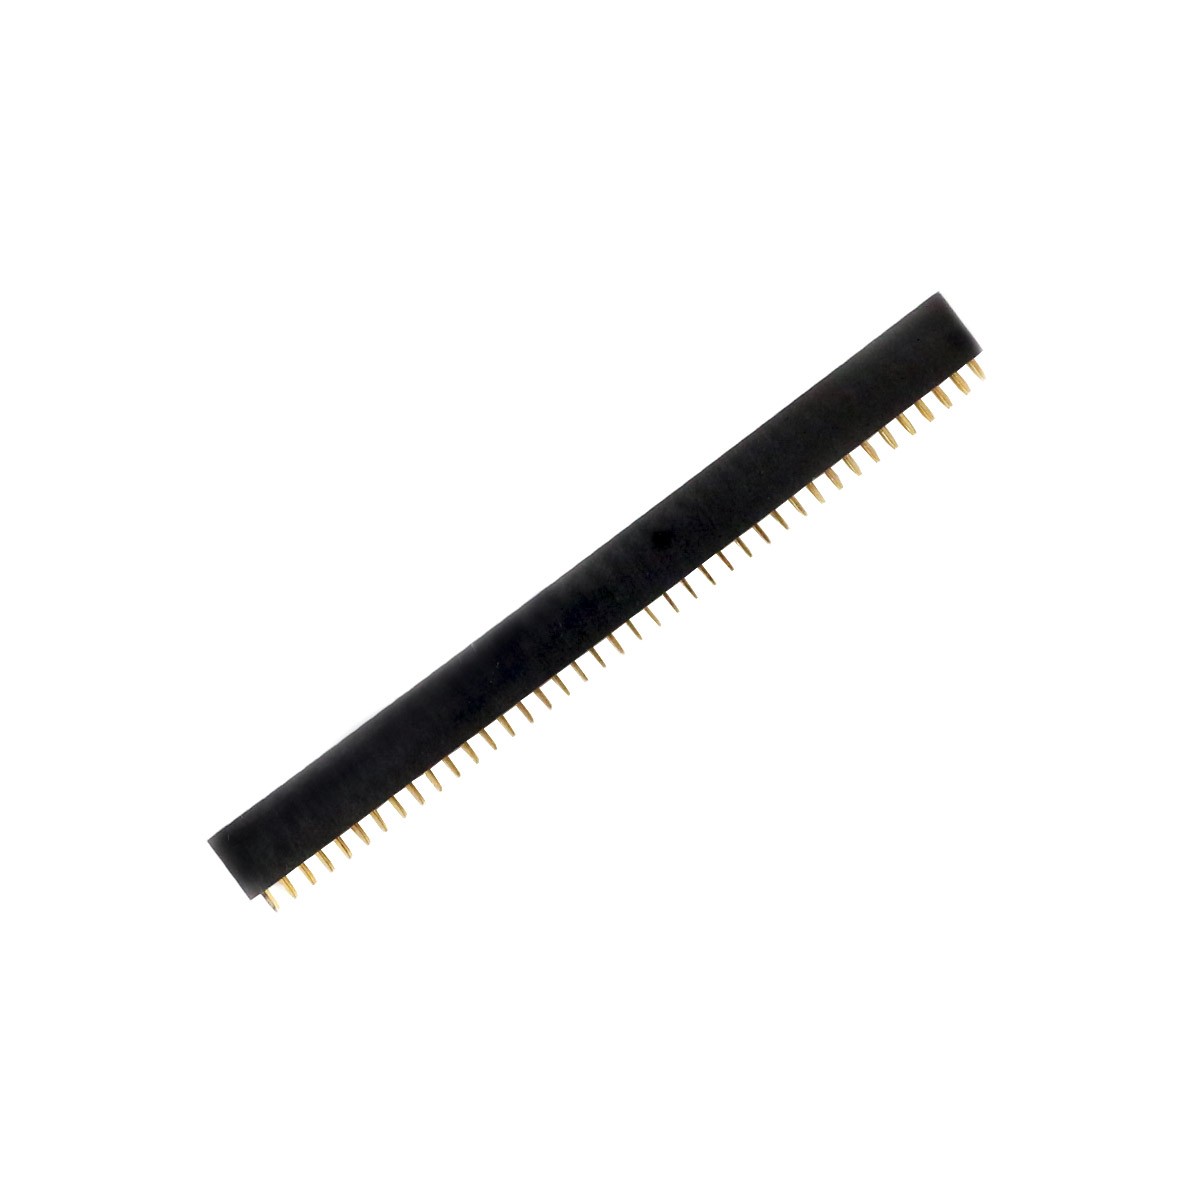 2.54mm Male / Female Pin Header 2x40 Pins 3mm (Unit)